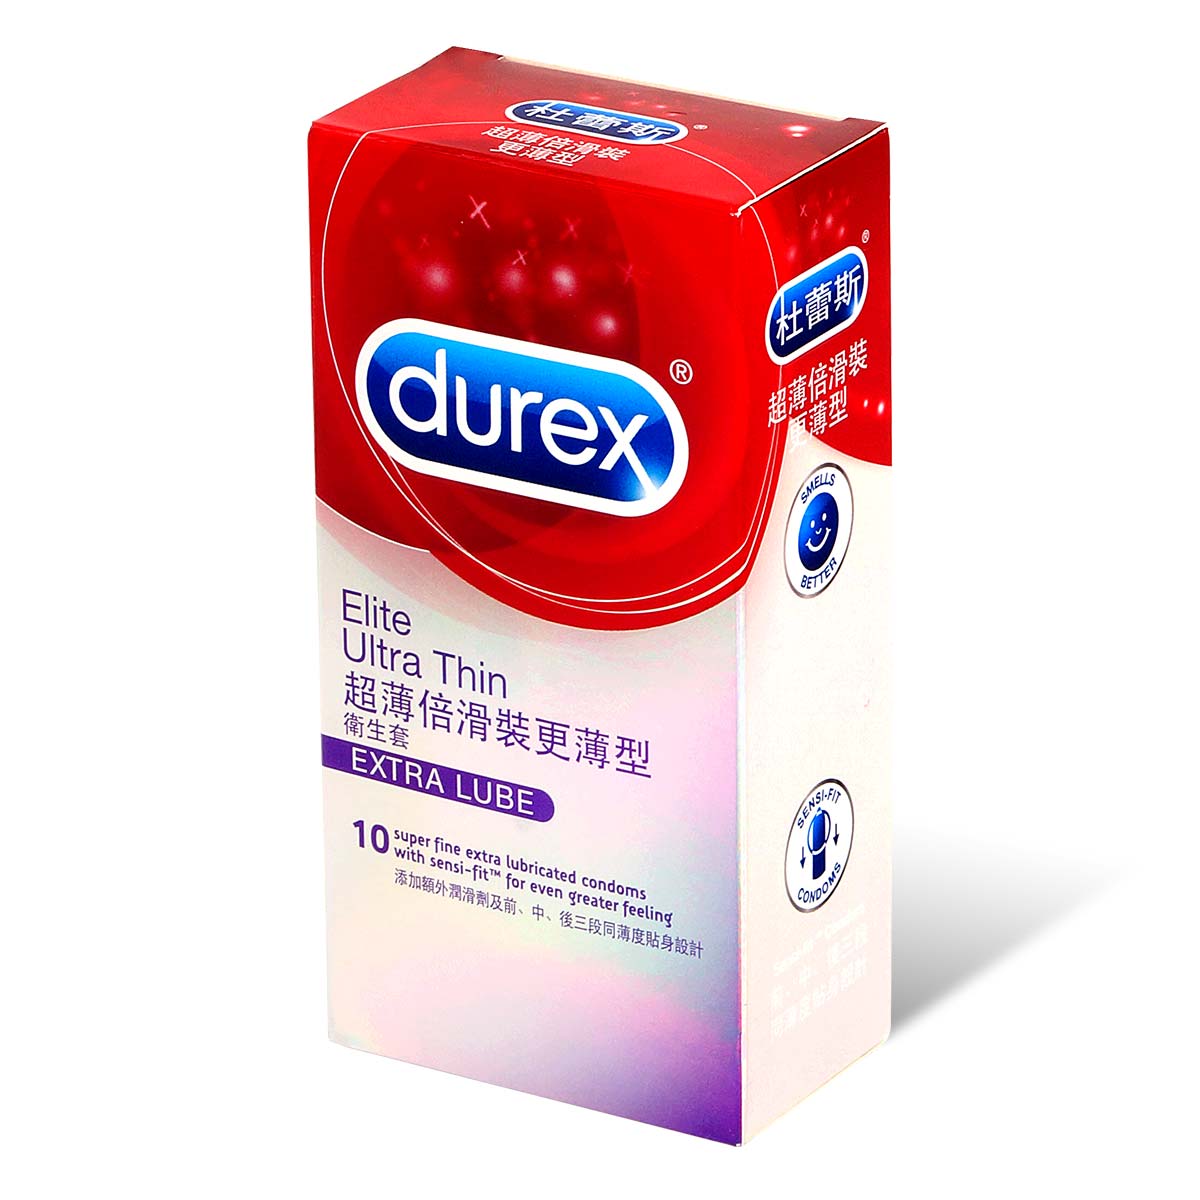 Durex 杜蕾斯 超薄倍滑裝更薄型 10 片裝 乳膠保險套-p_1